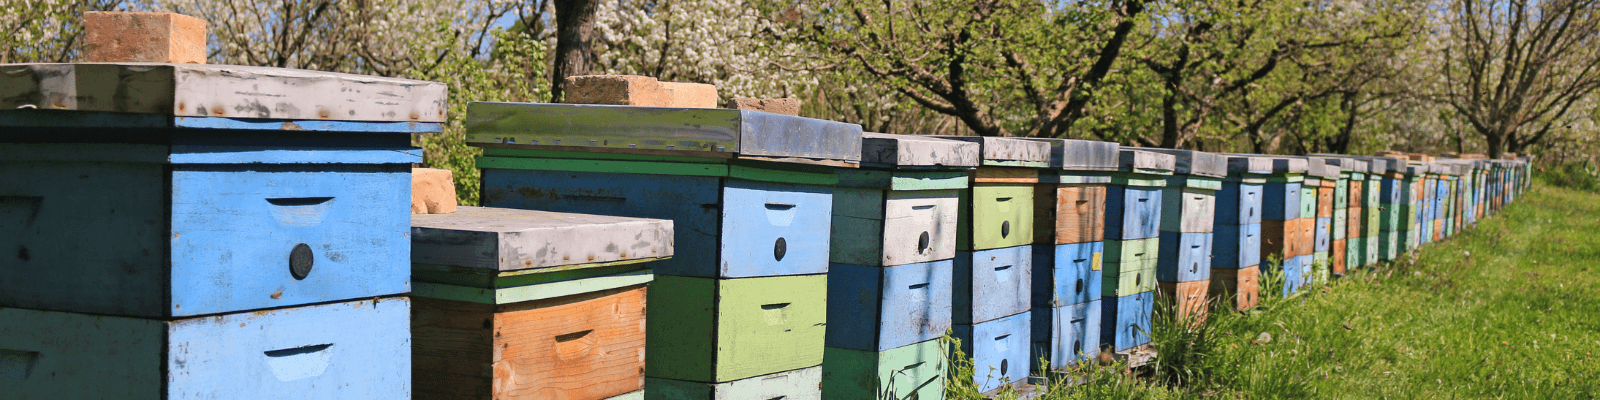 photo de ruches alignees